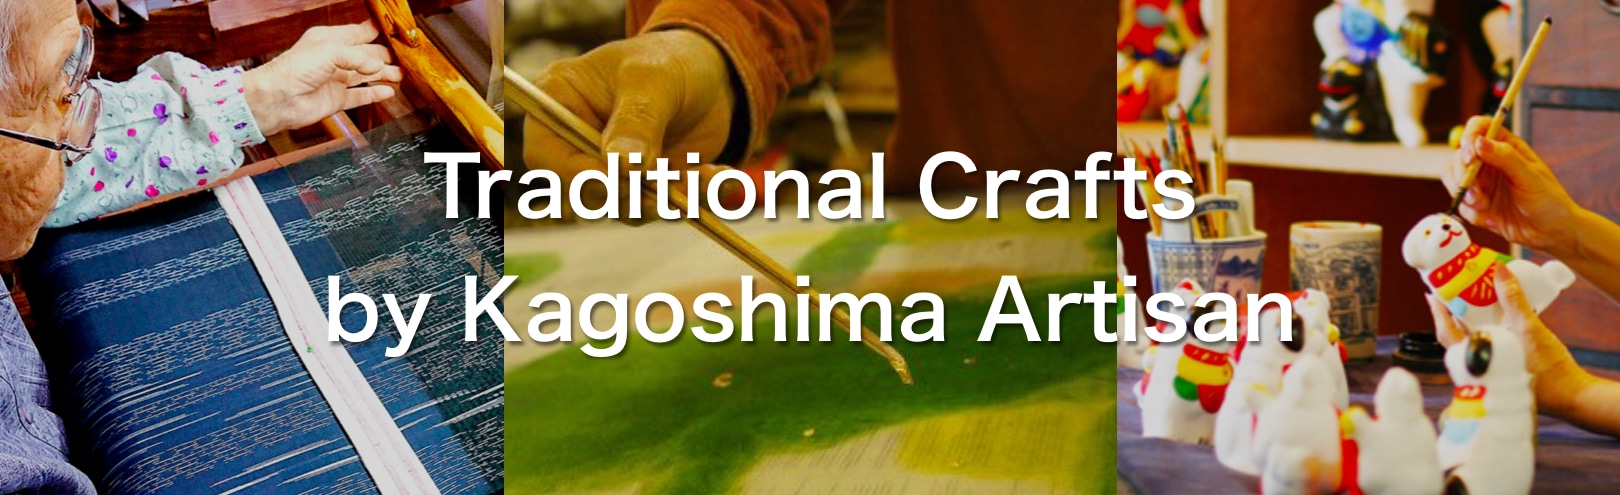 Traditional Crafts by Kagoshima Artisan